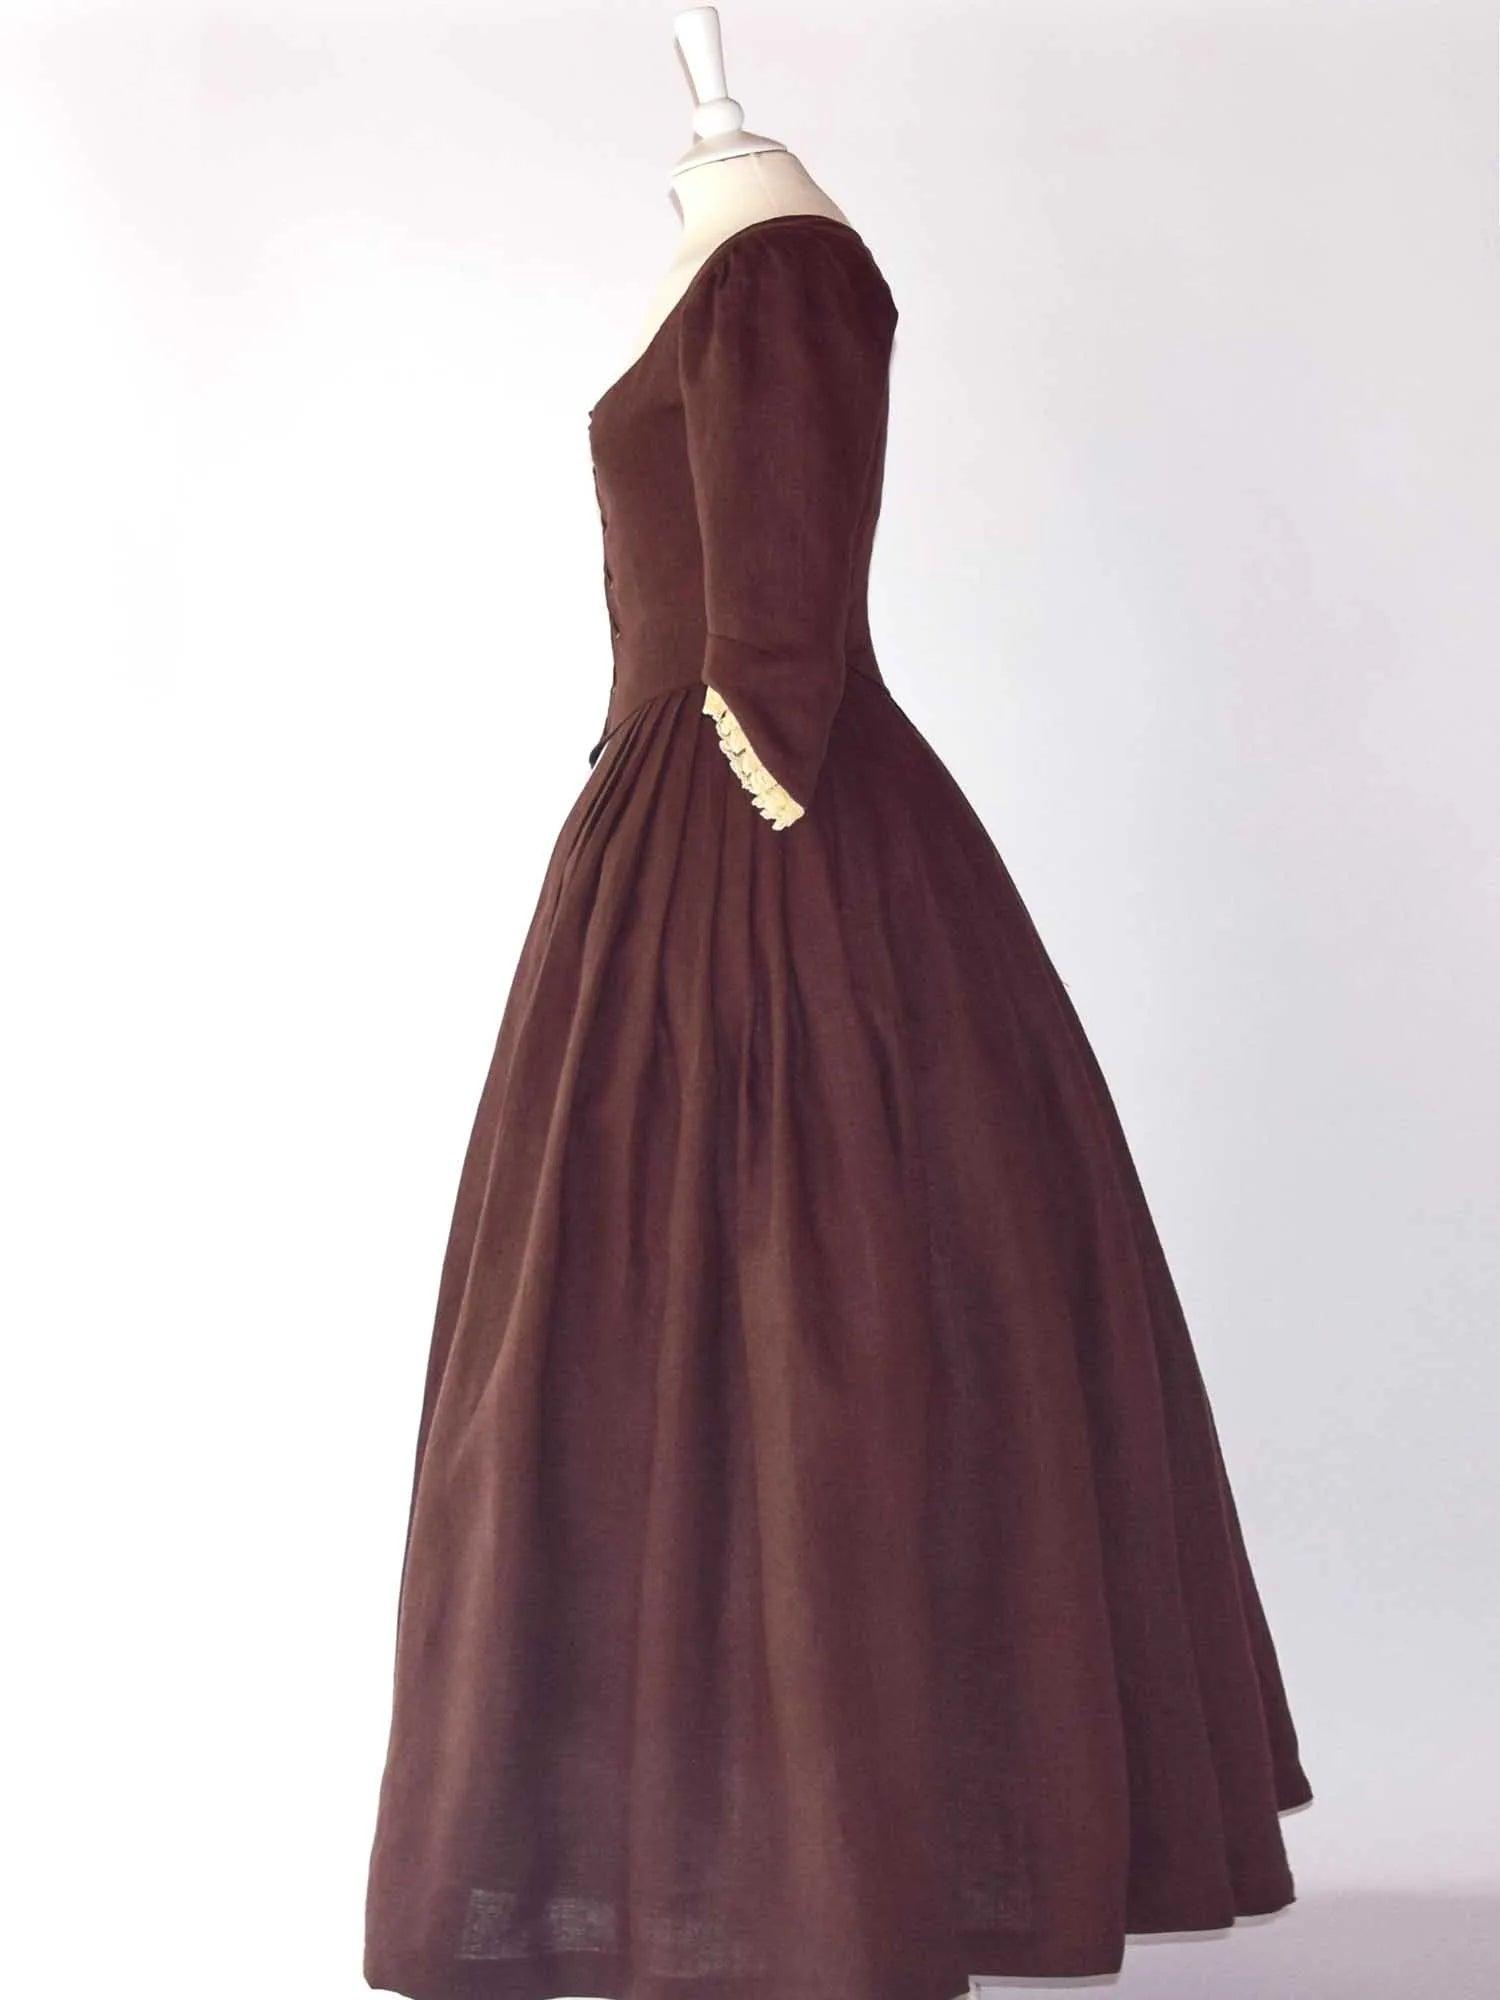 18th Century Overdress in Chocolate Linen & Skirt - Atelier Serraspina